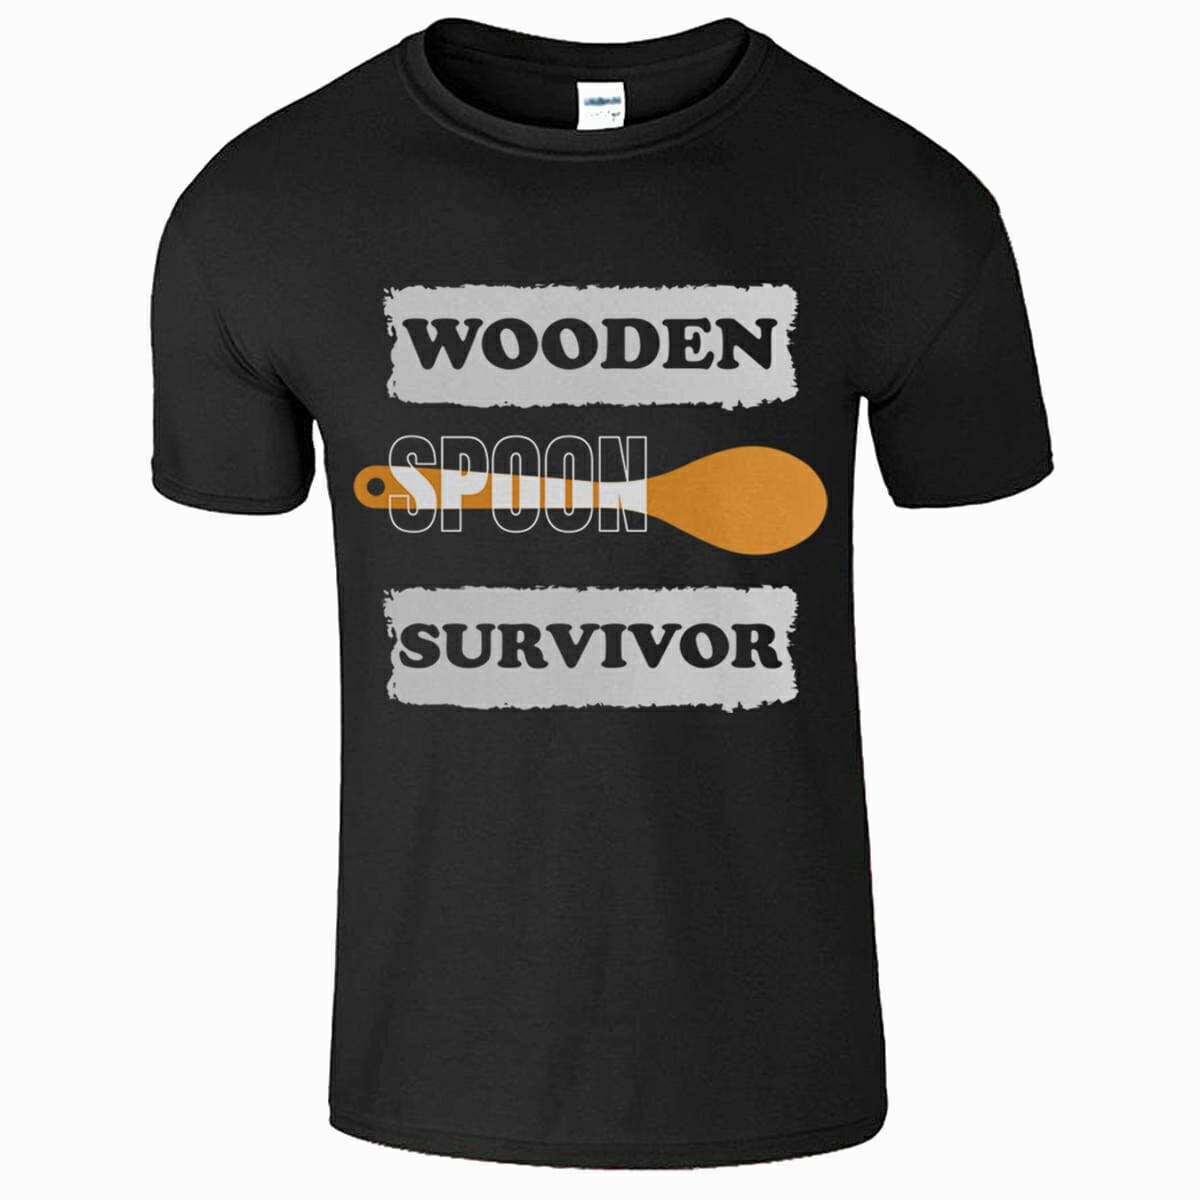 Wood Spoon Survivor Urban Style  Funny Tshirt Design For Men.